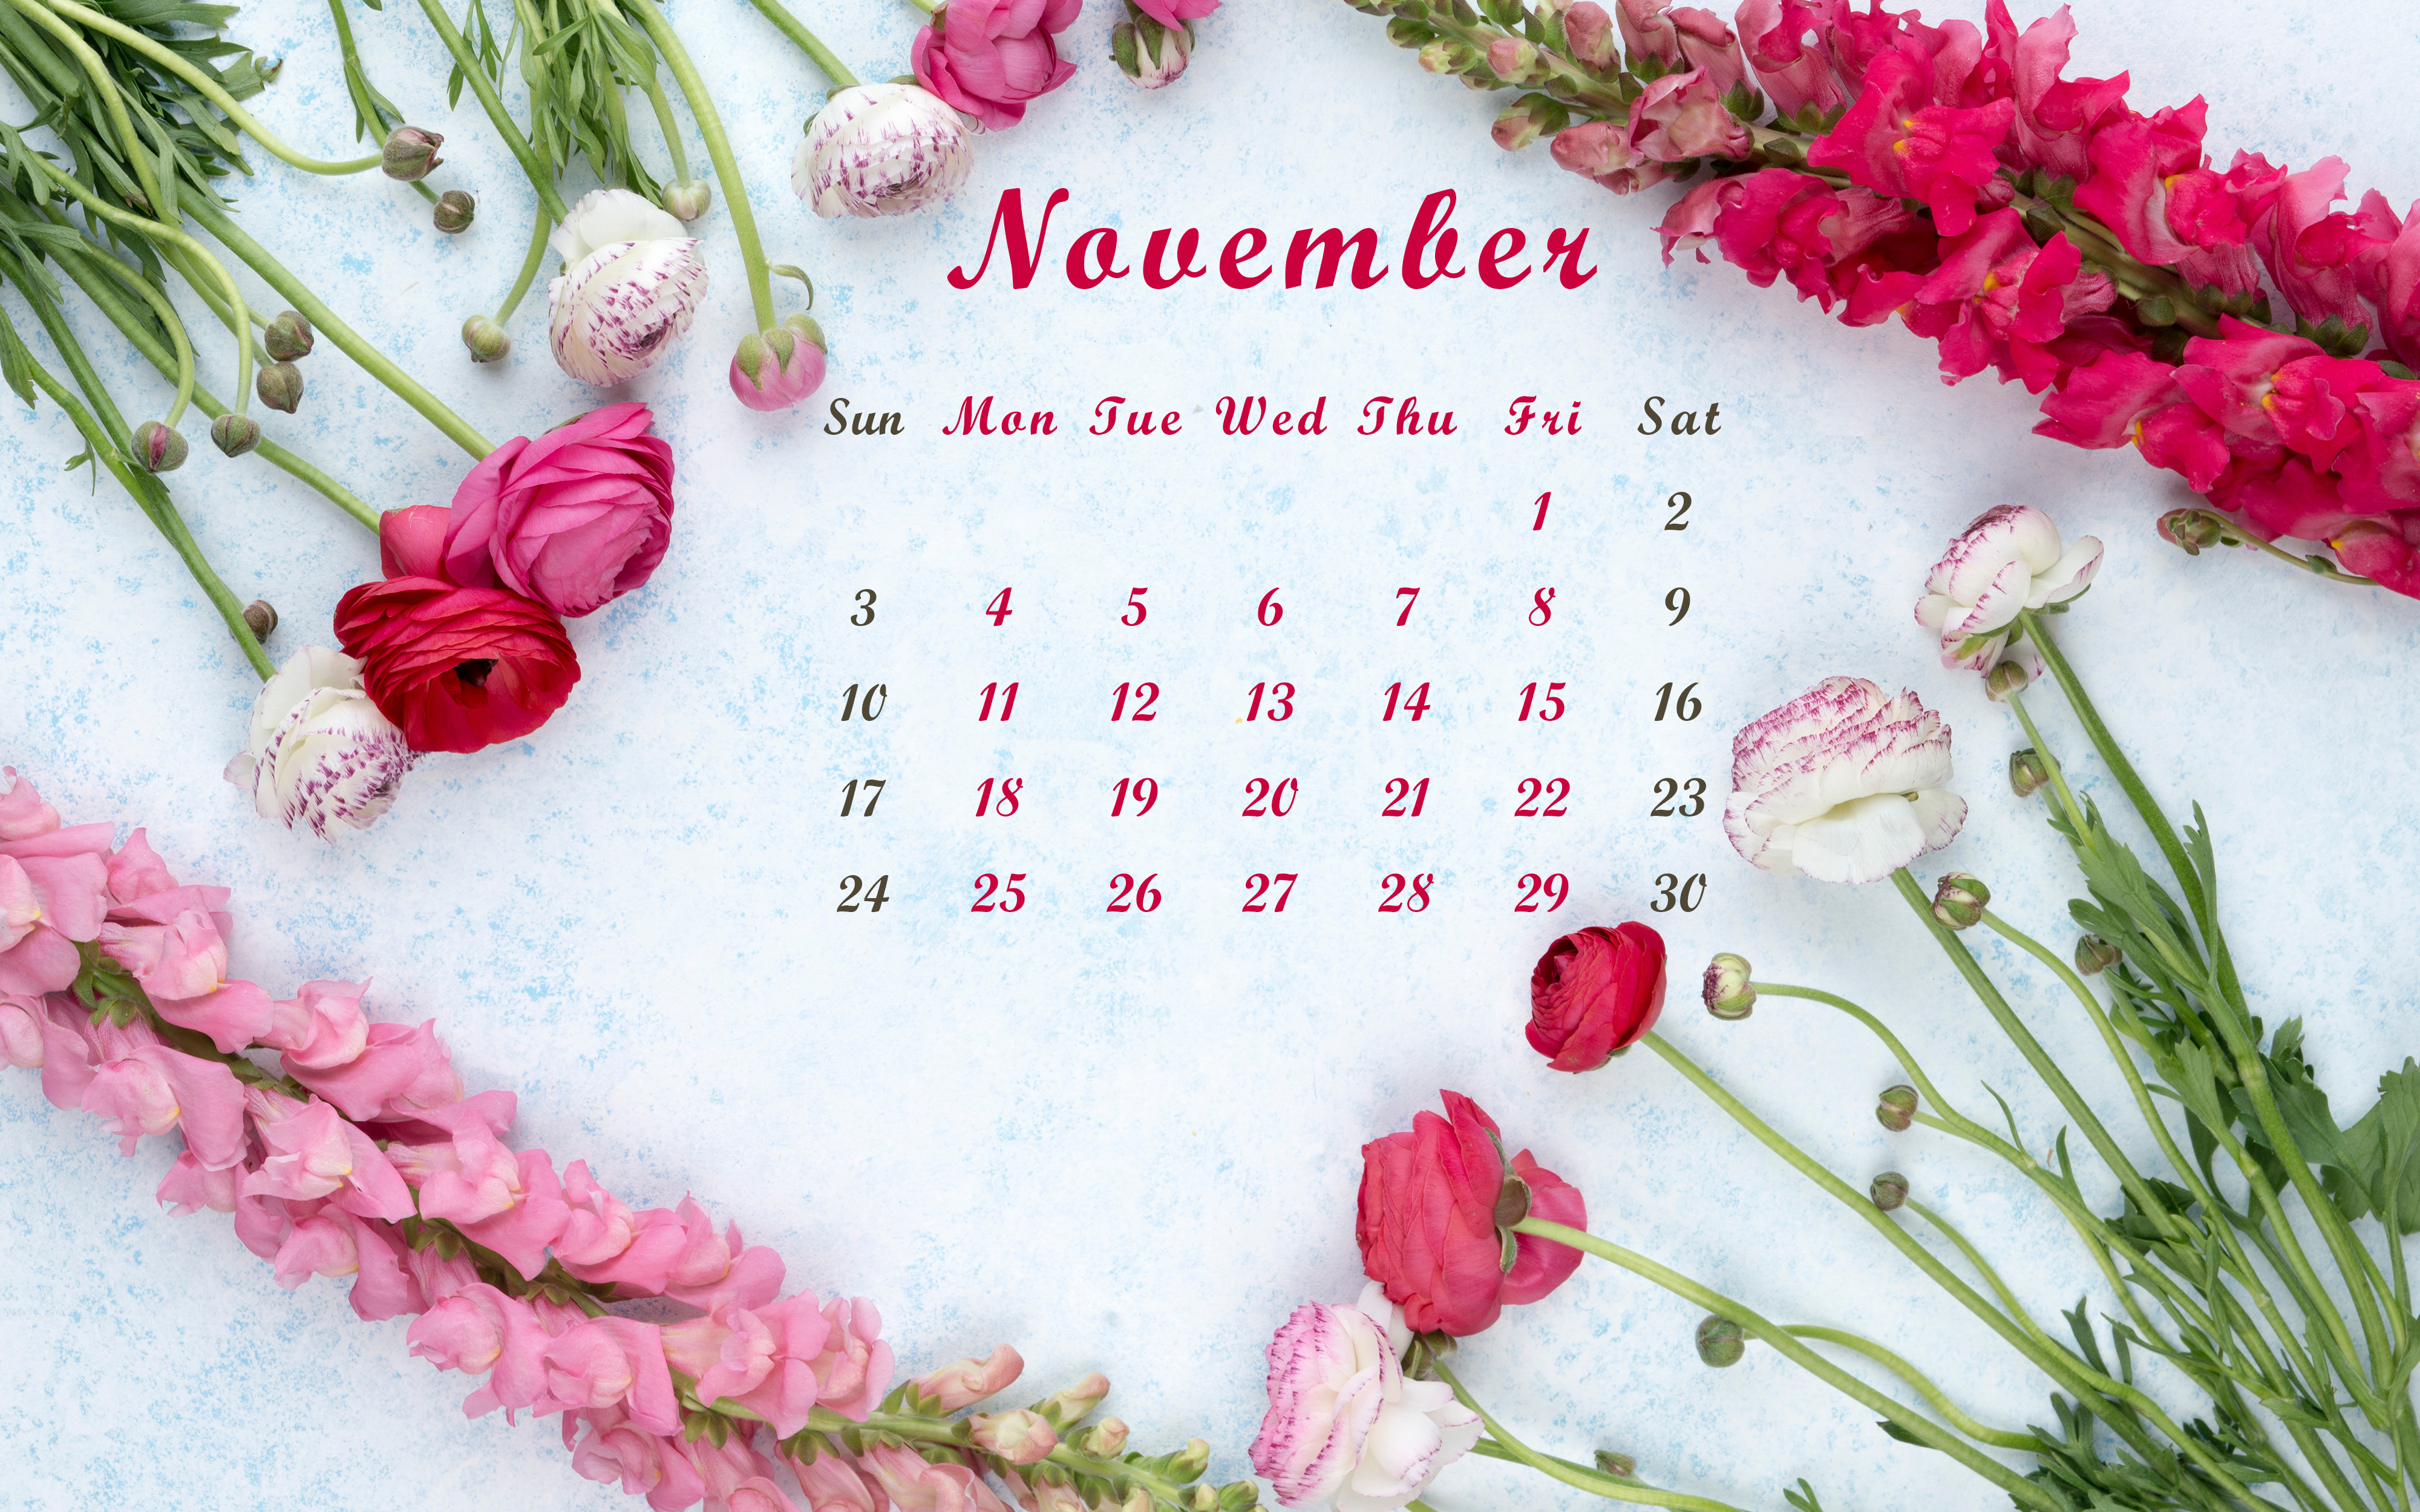 November 2019 Wallpaper Background - Desktop Calendar November 2019 - HD Wallpaper 